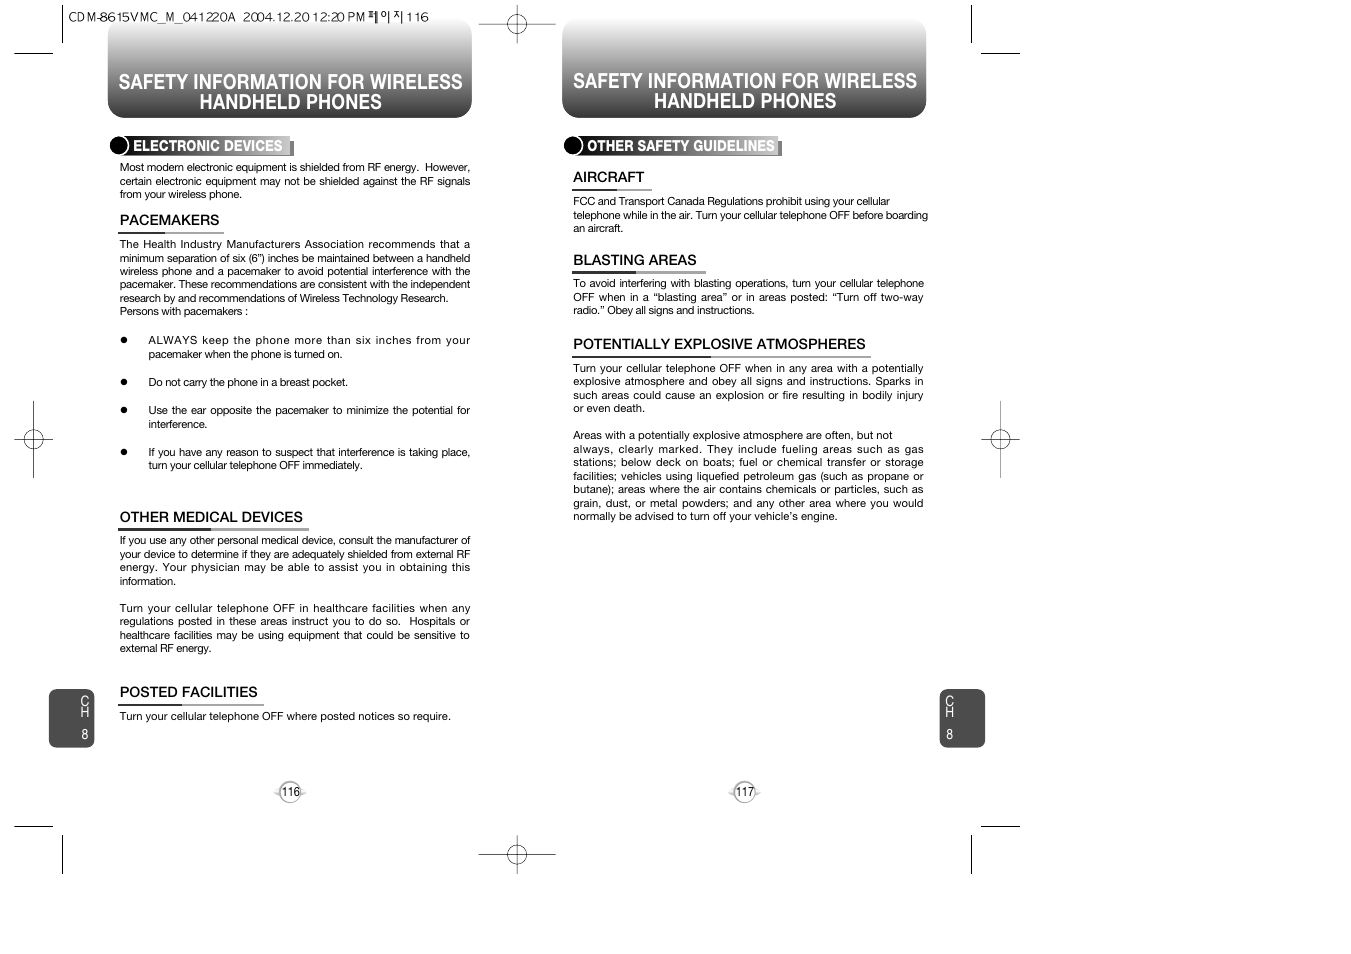 UTStarcom CDM-8615 User Manual | Page 60 / 66